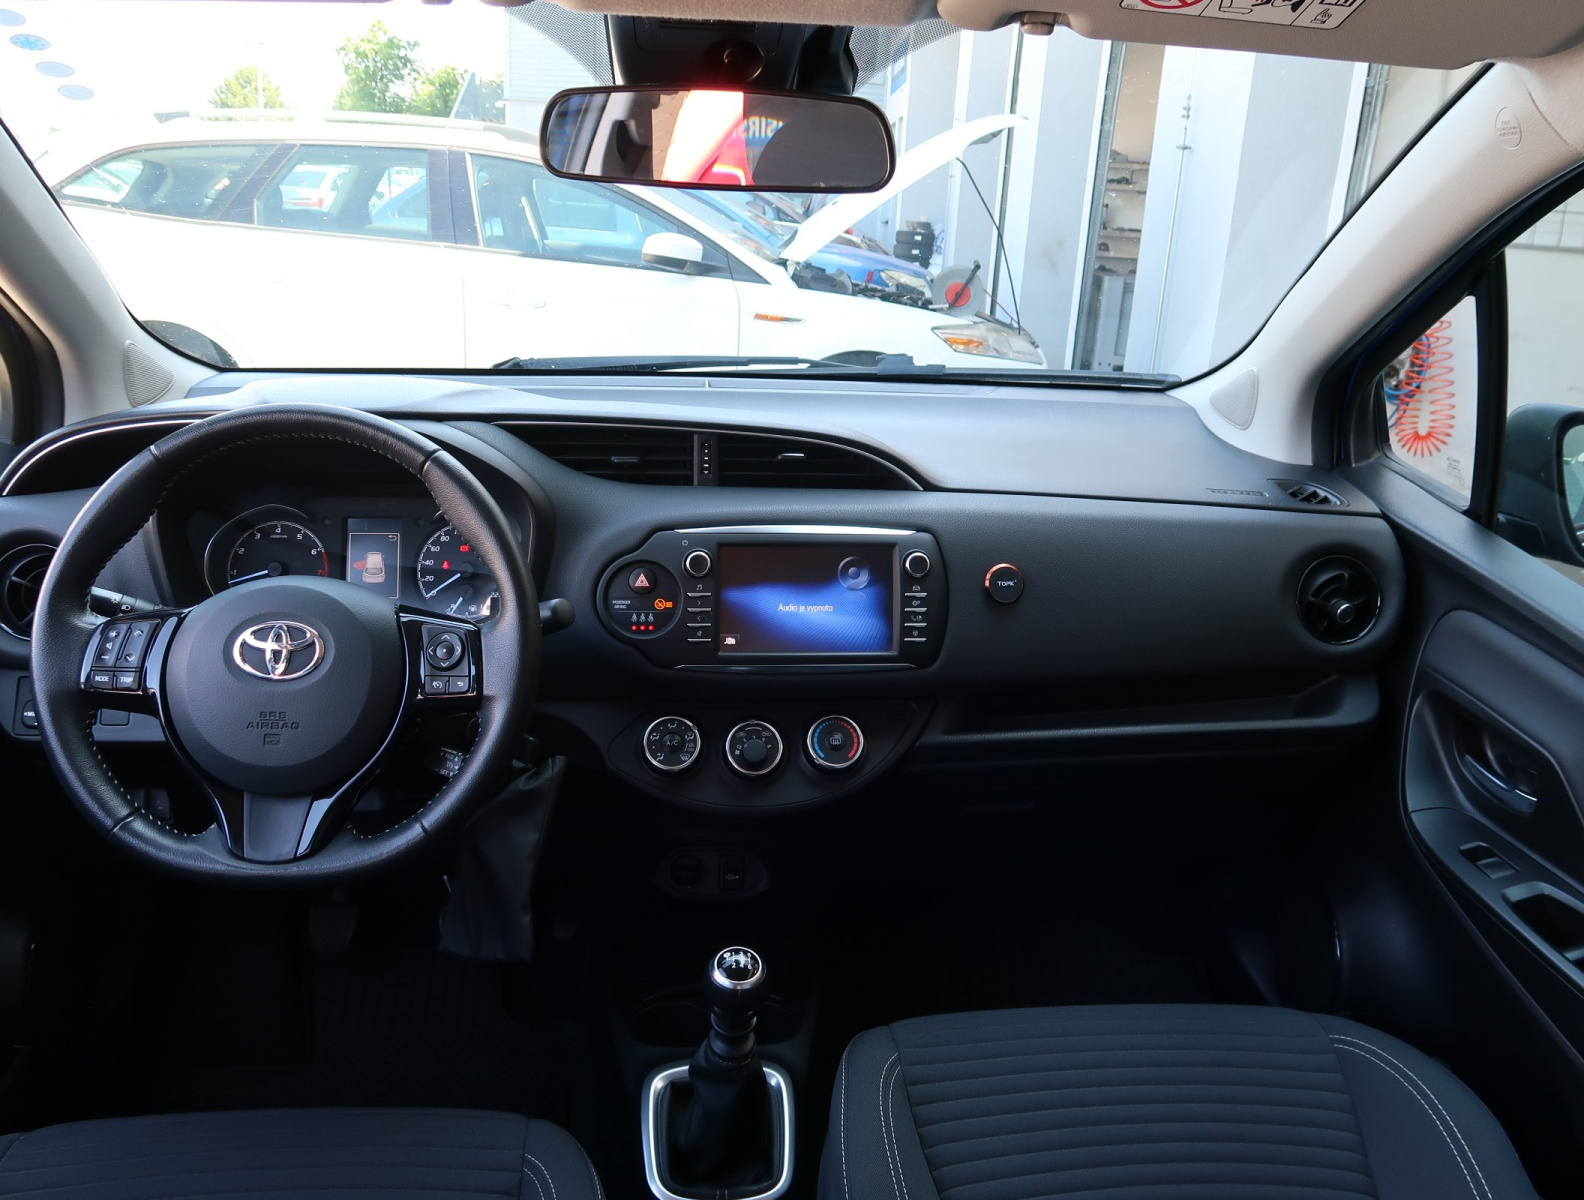 Toyota Yaris, 2018, 1.5 Dual VVT-i, 82kW